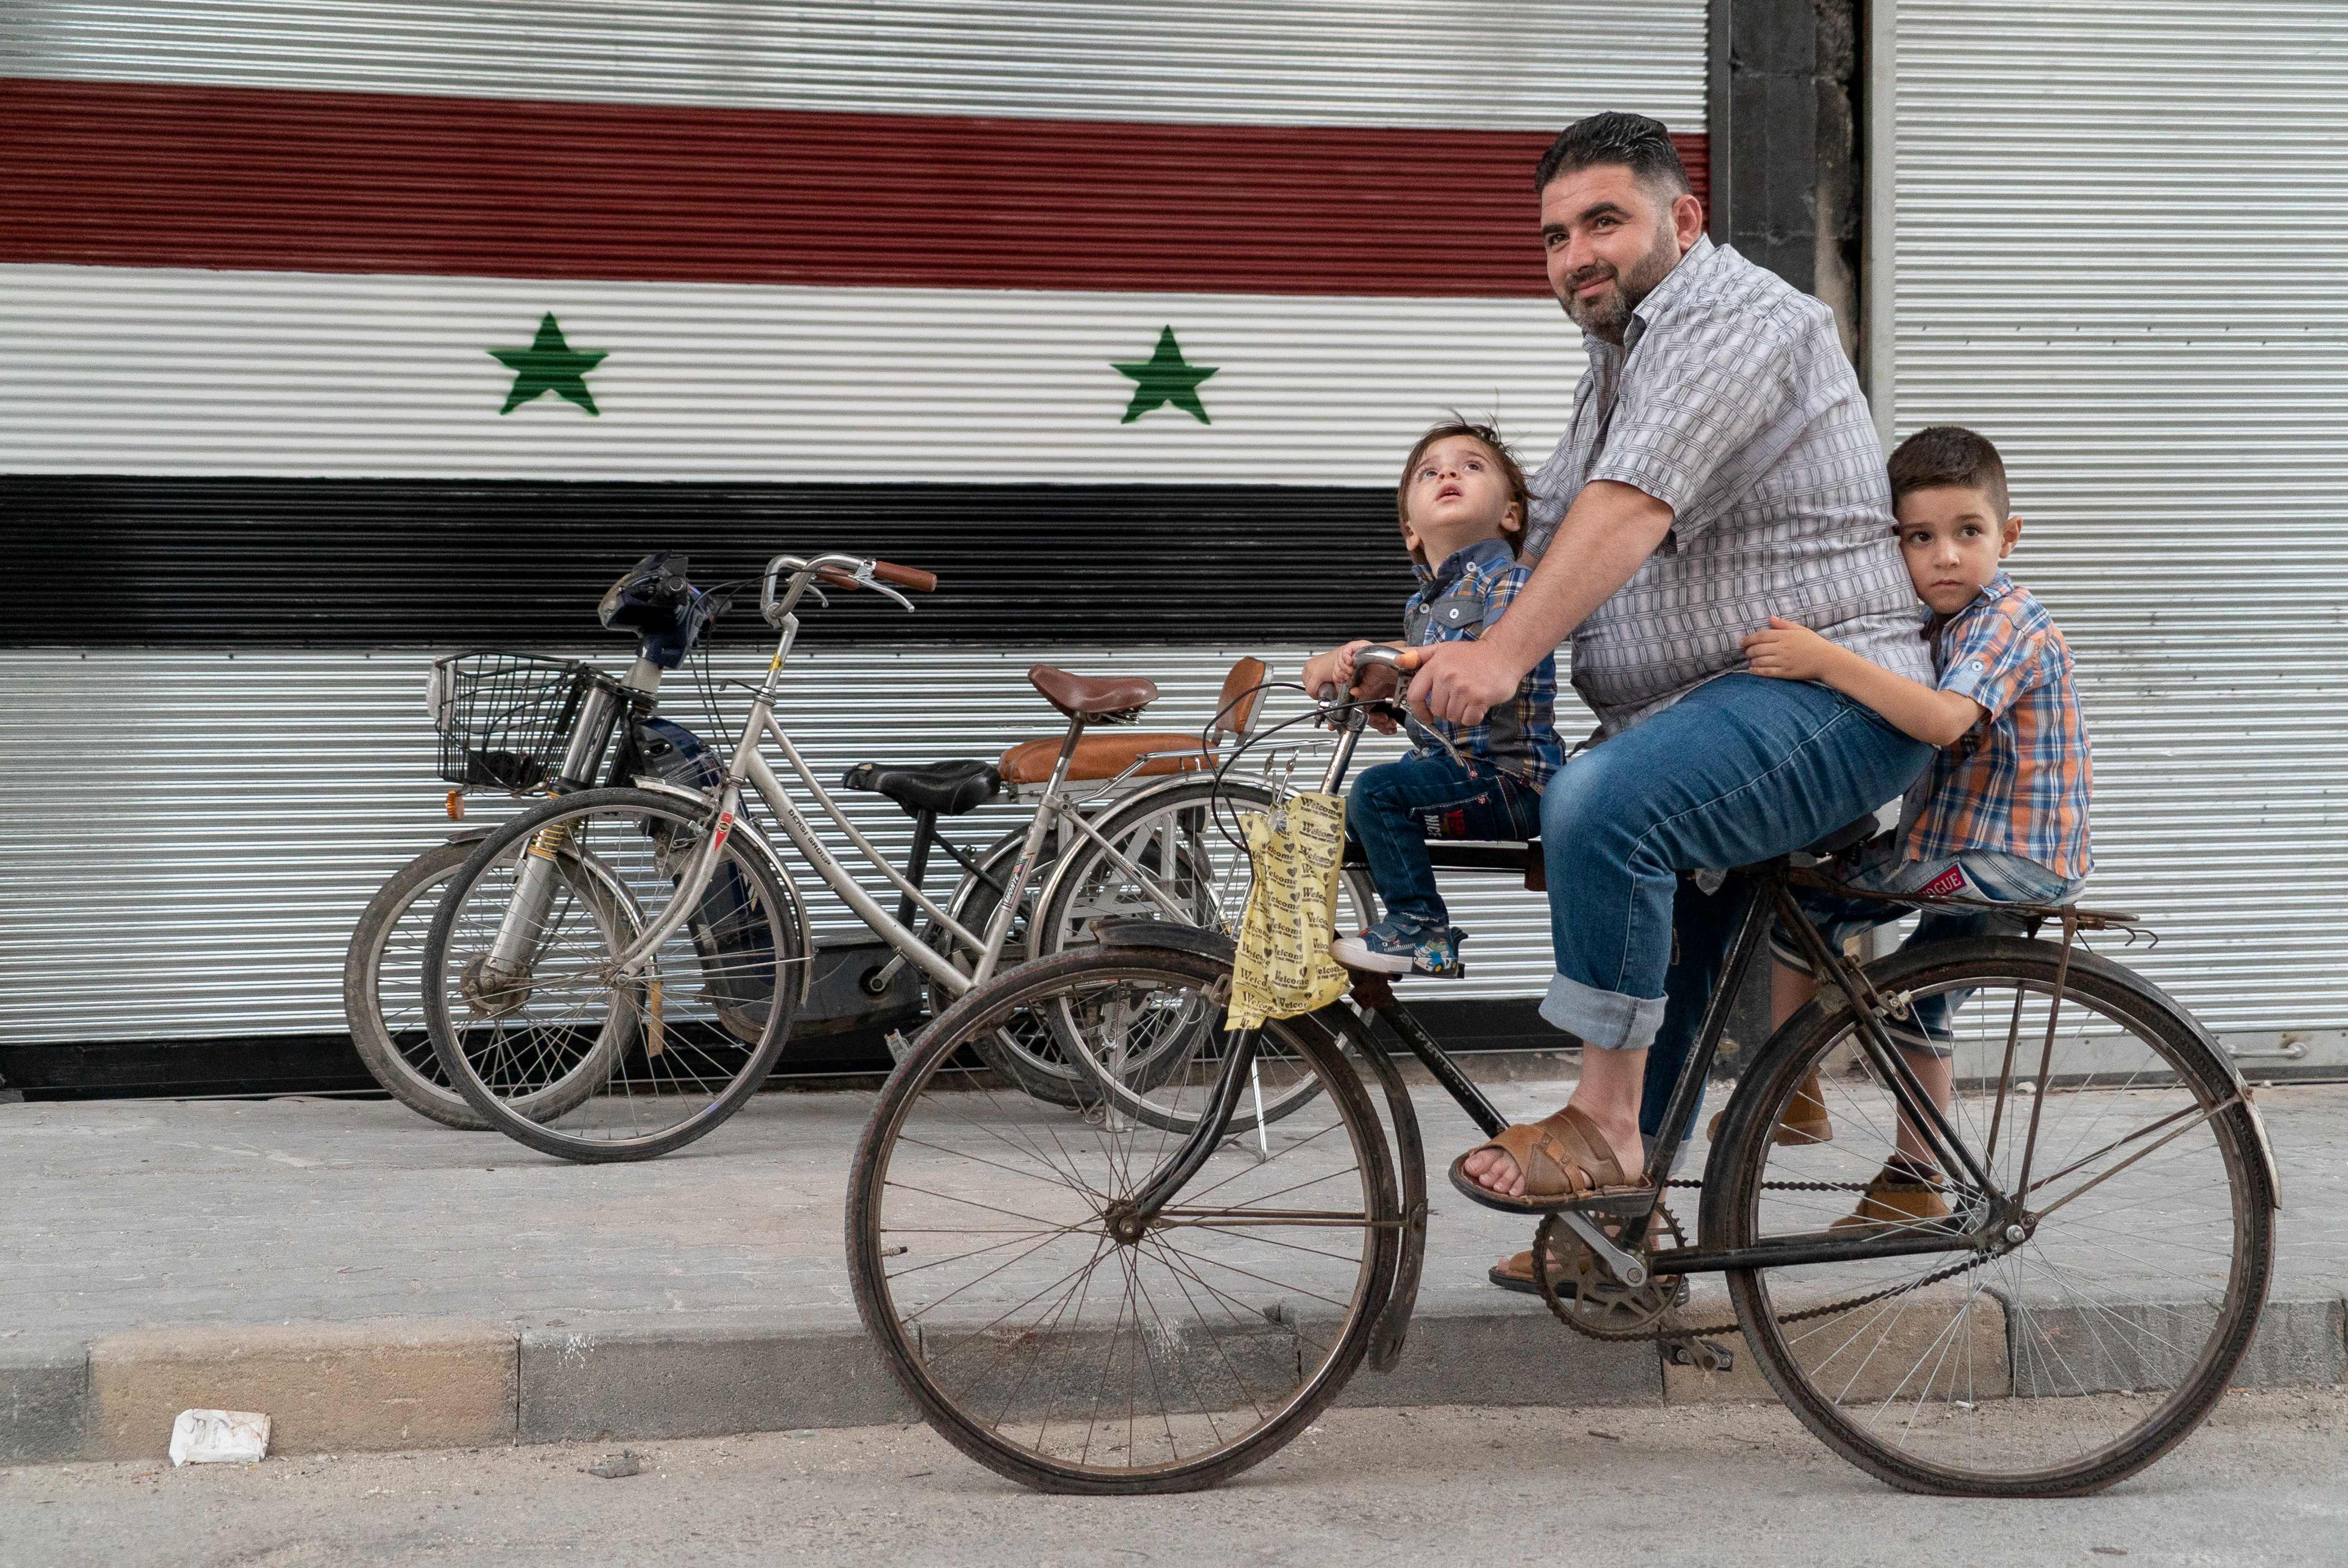 سورى بصحبة ابناءه على دراجه فى سوريا يشعر بالآمان